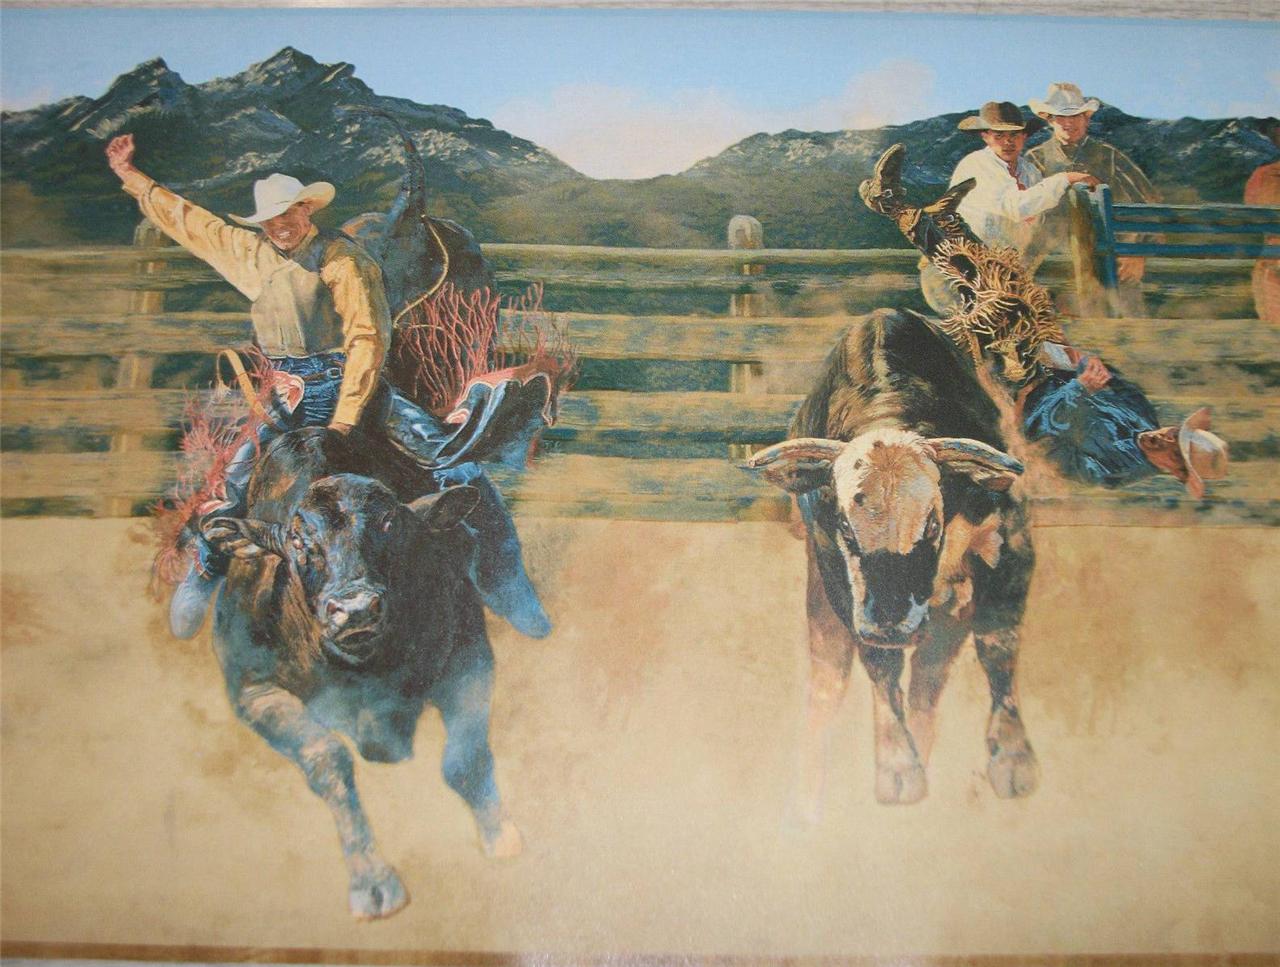 Wallpaper Border Western Cowboys Bull Riding Bucking Broncos